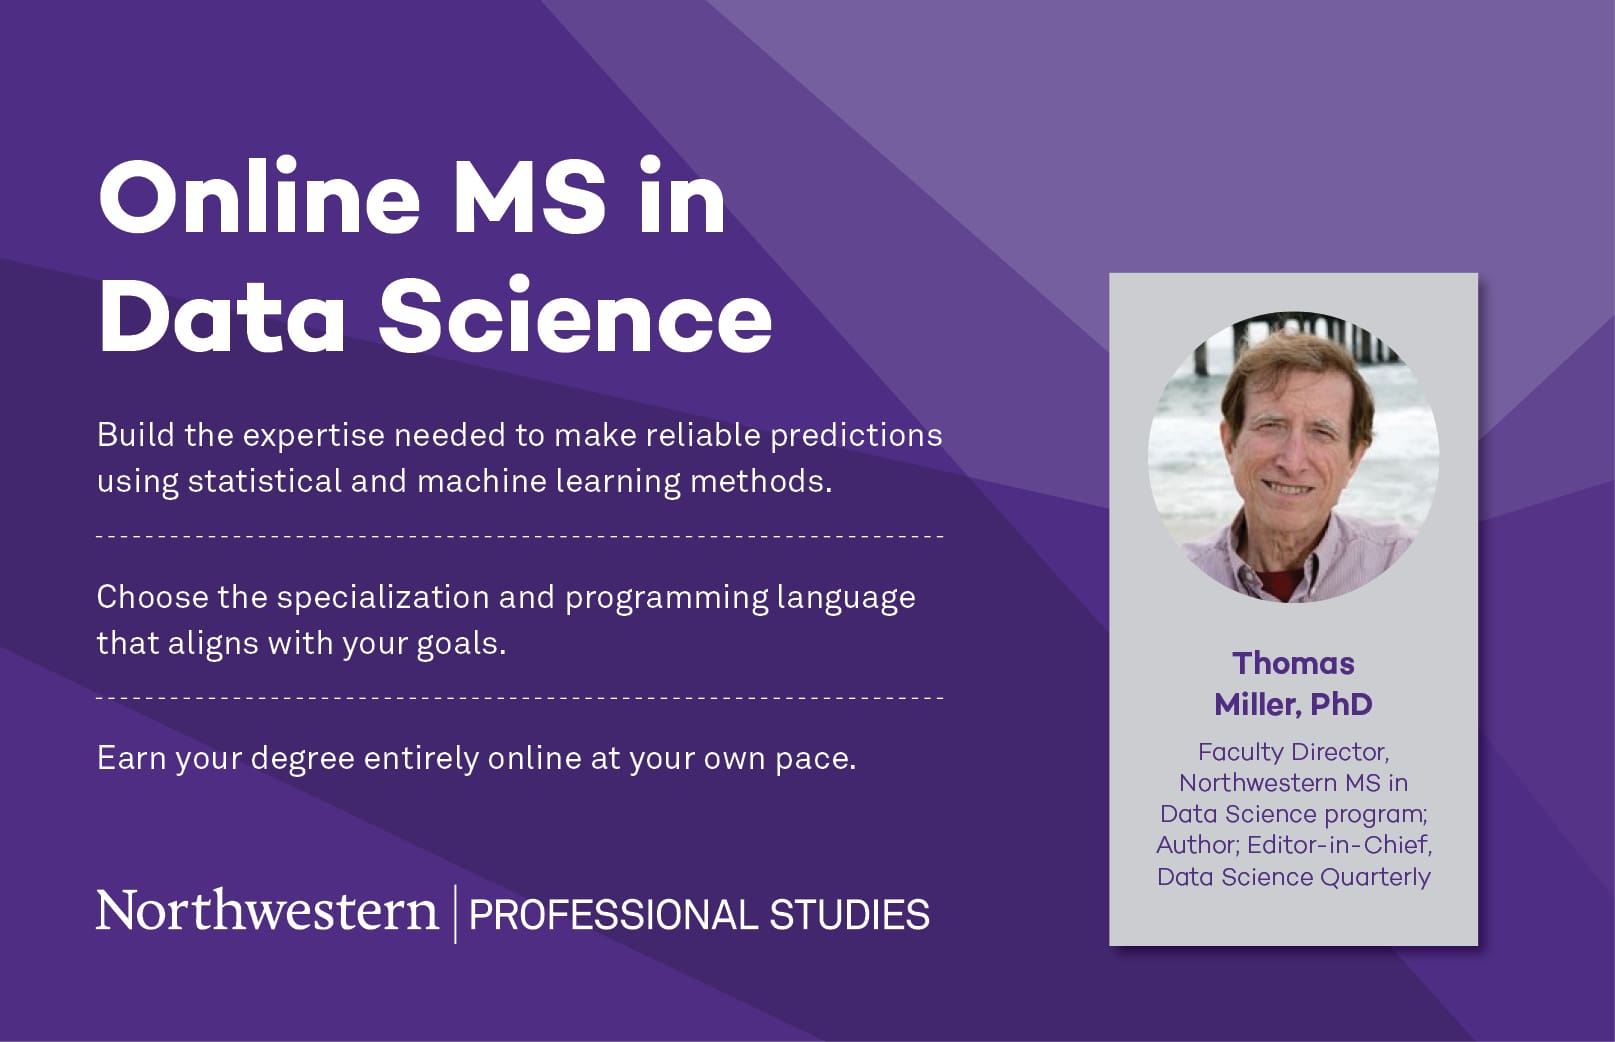 Dr. Thomas Miller delves into Northwestern University’s Data Science Graduate Programs available online